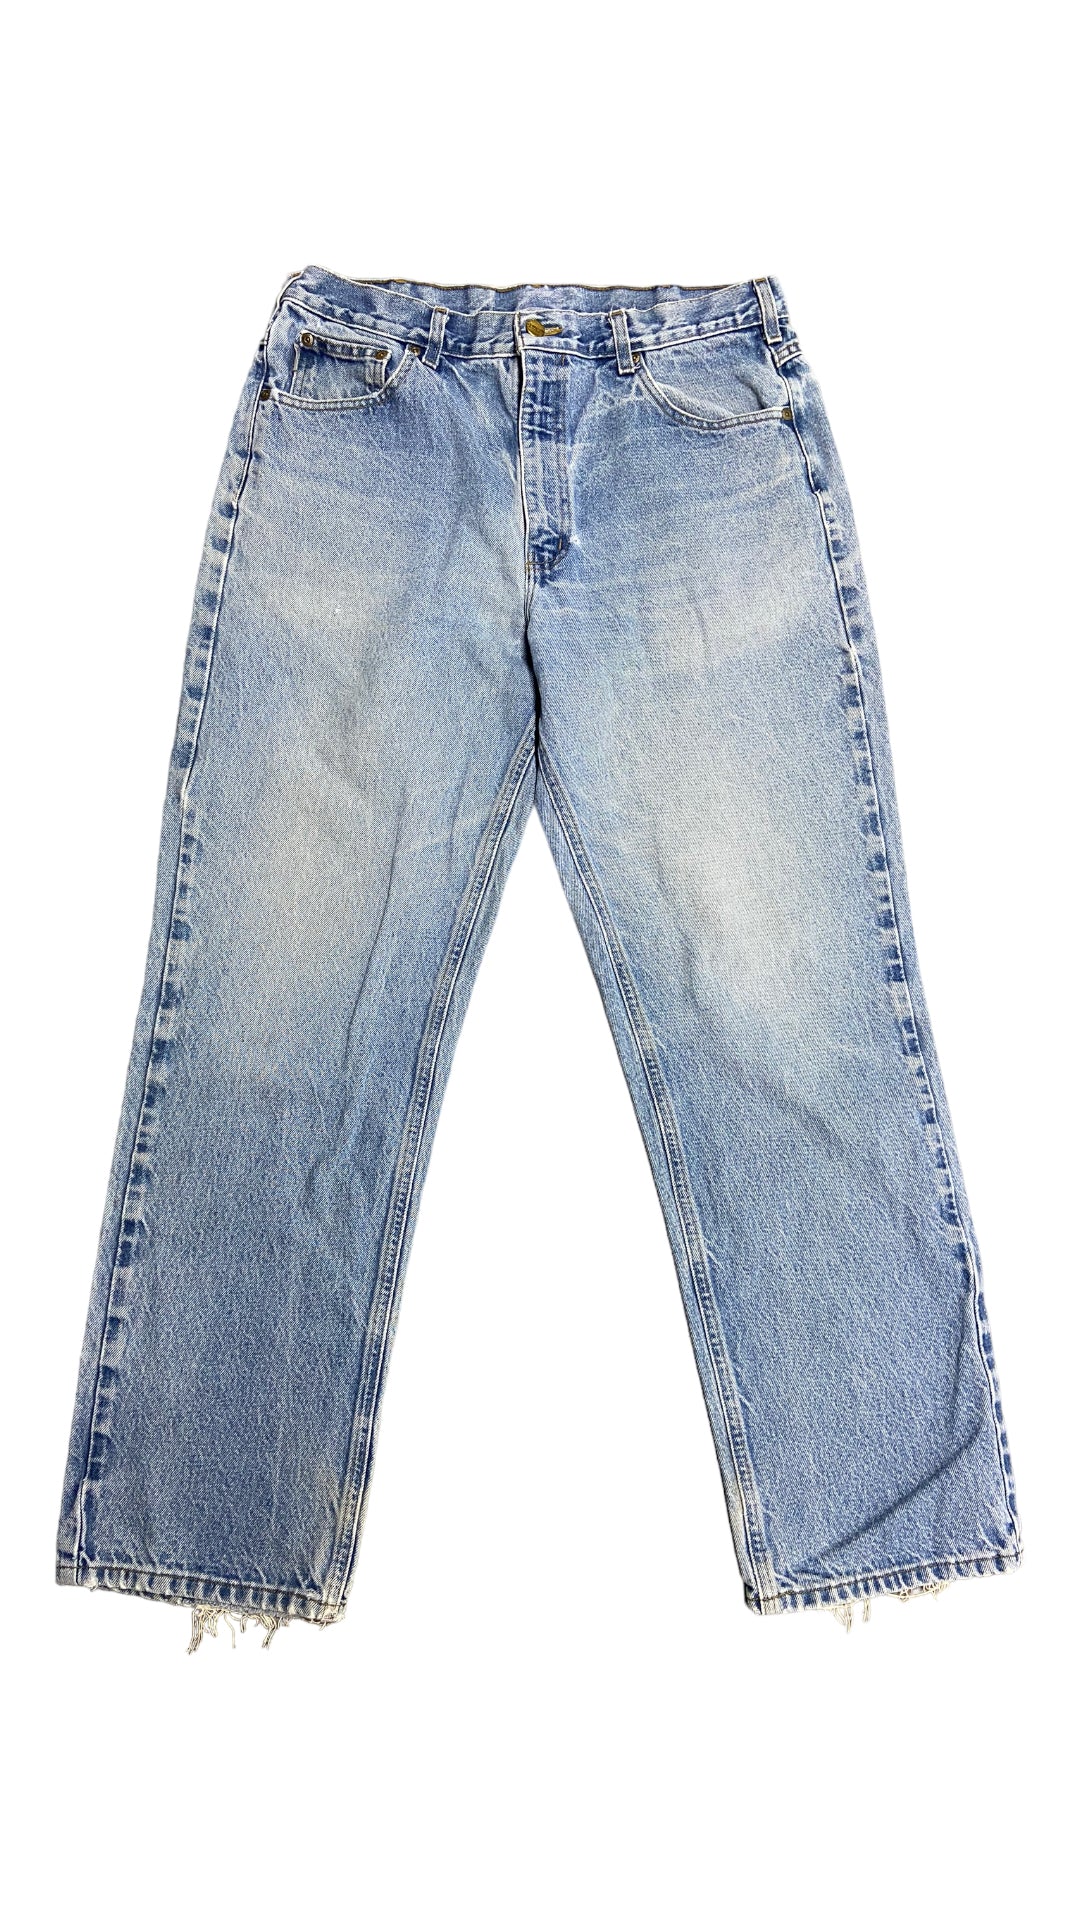 VTG Carhartt Blue Denim Jeans Sz 35x31